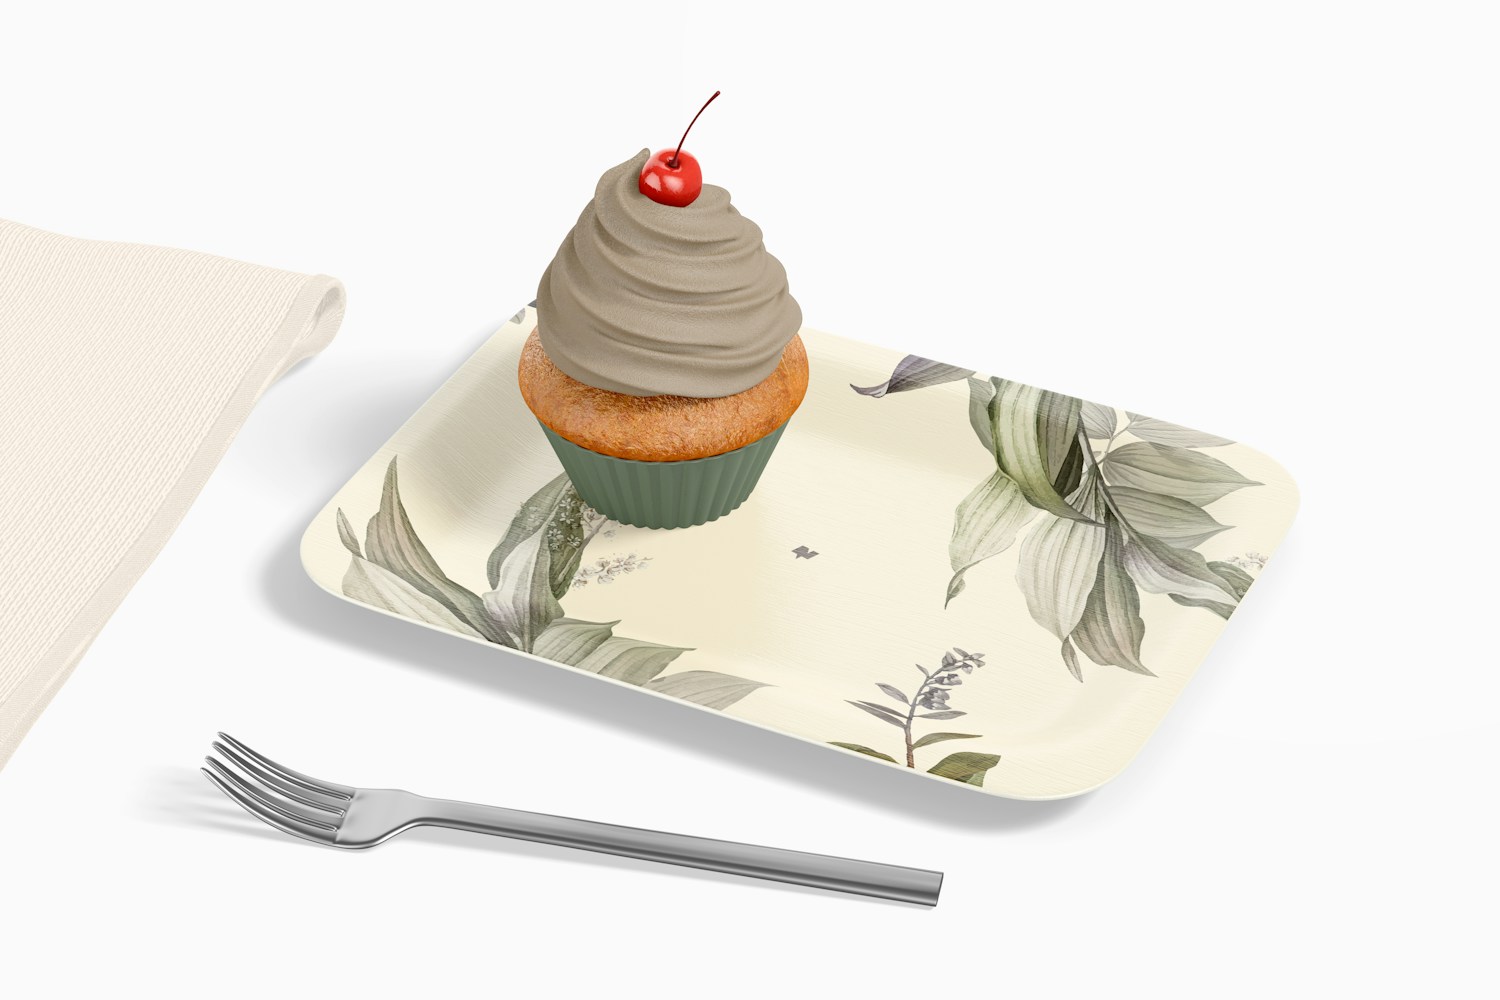 Rectangular Dessert Plate with Cupcake Mockup